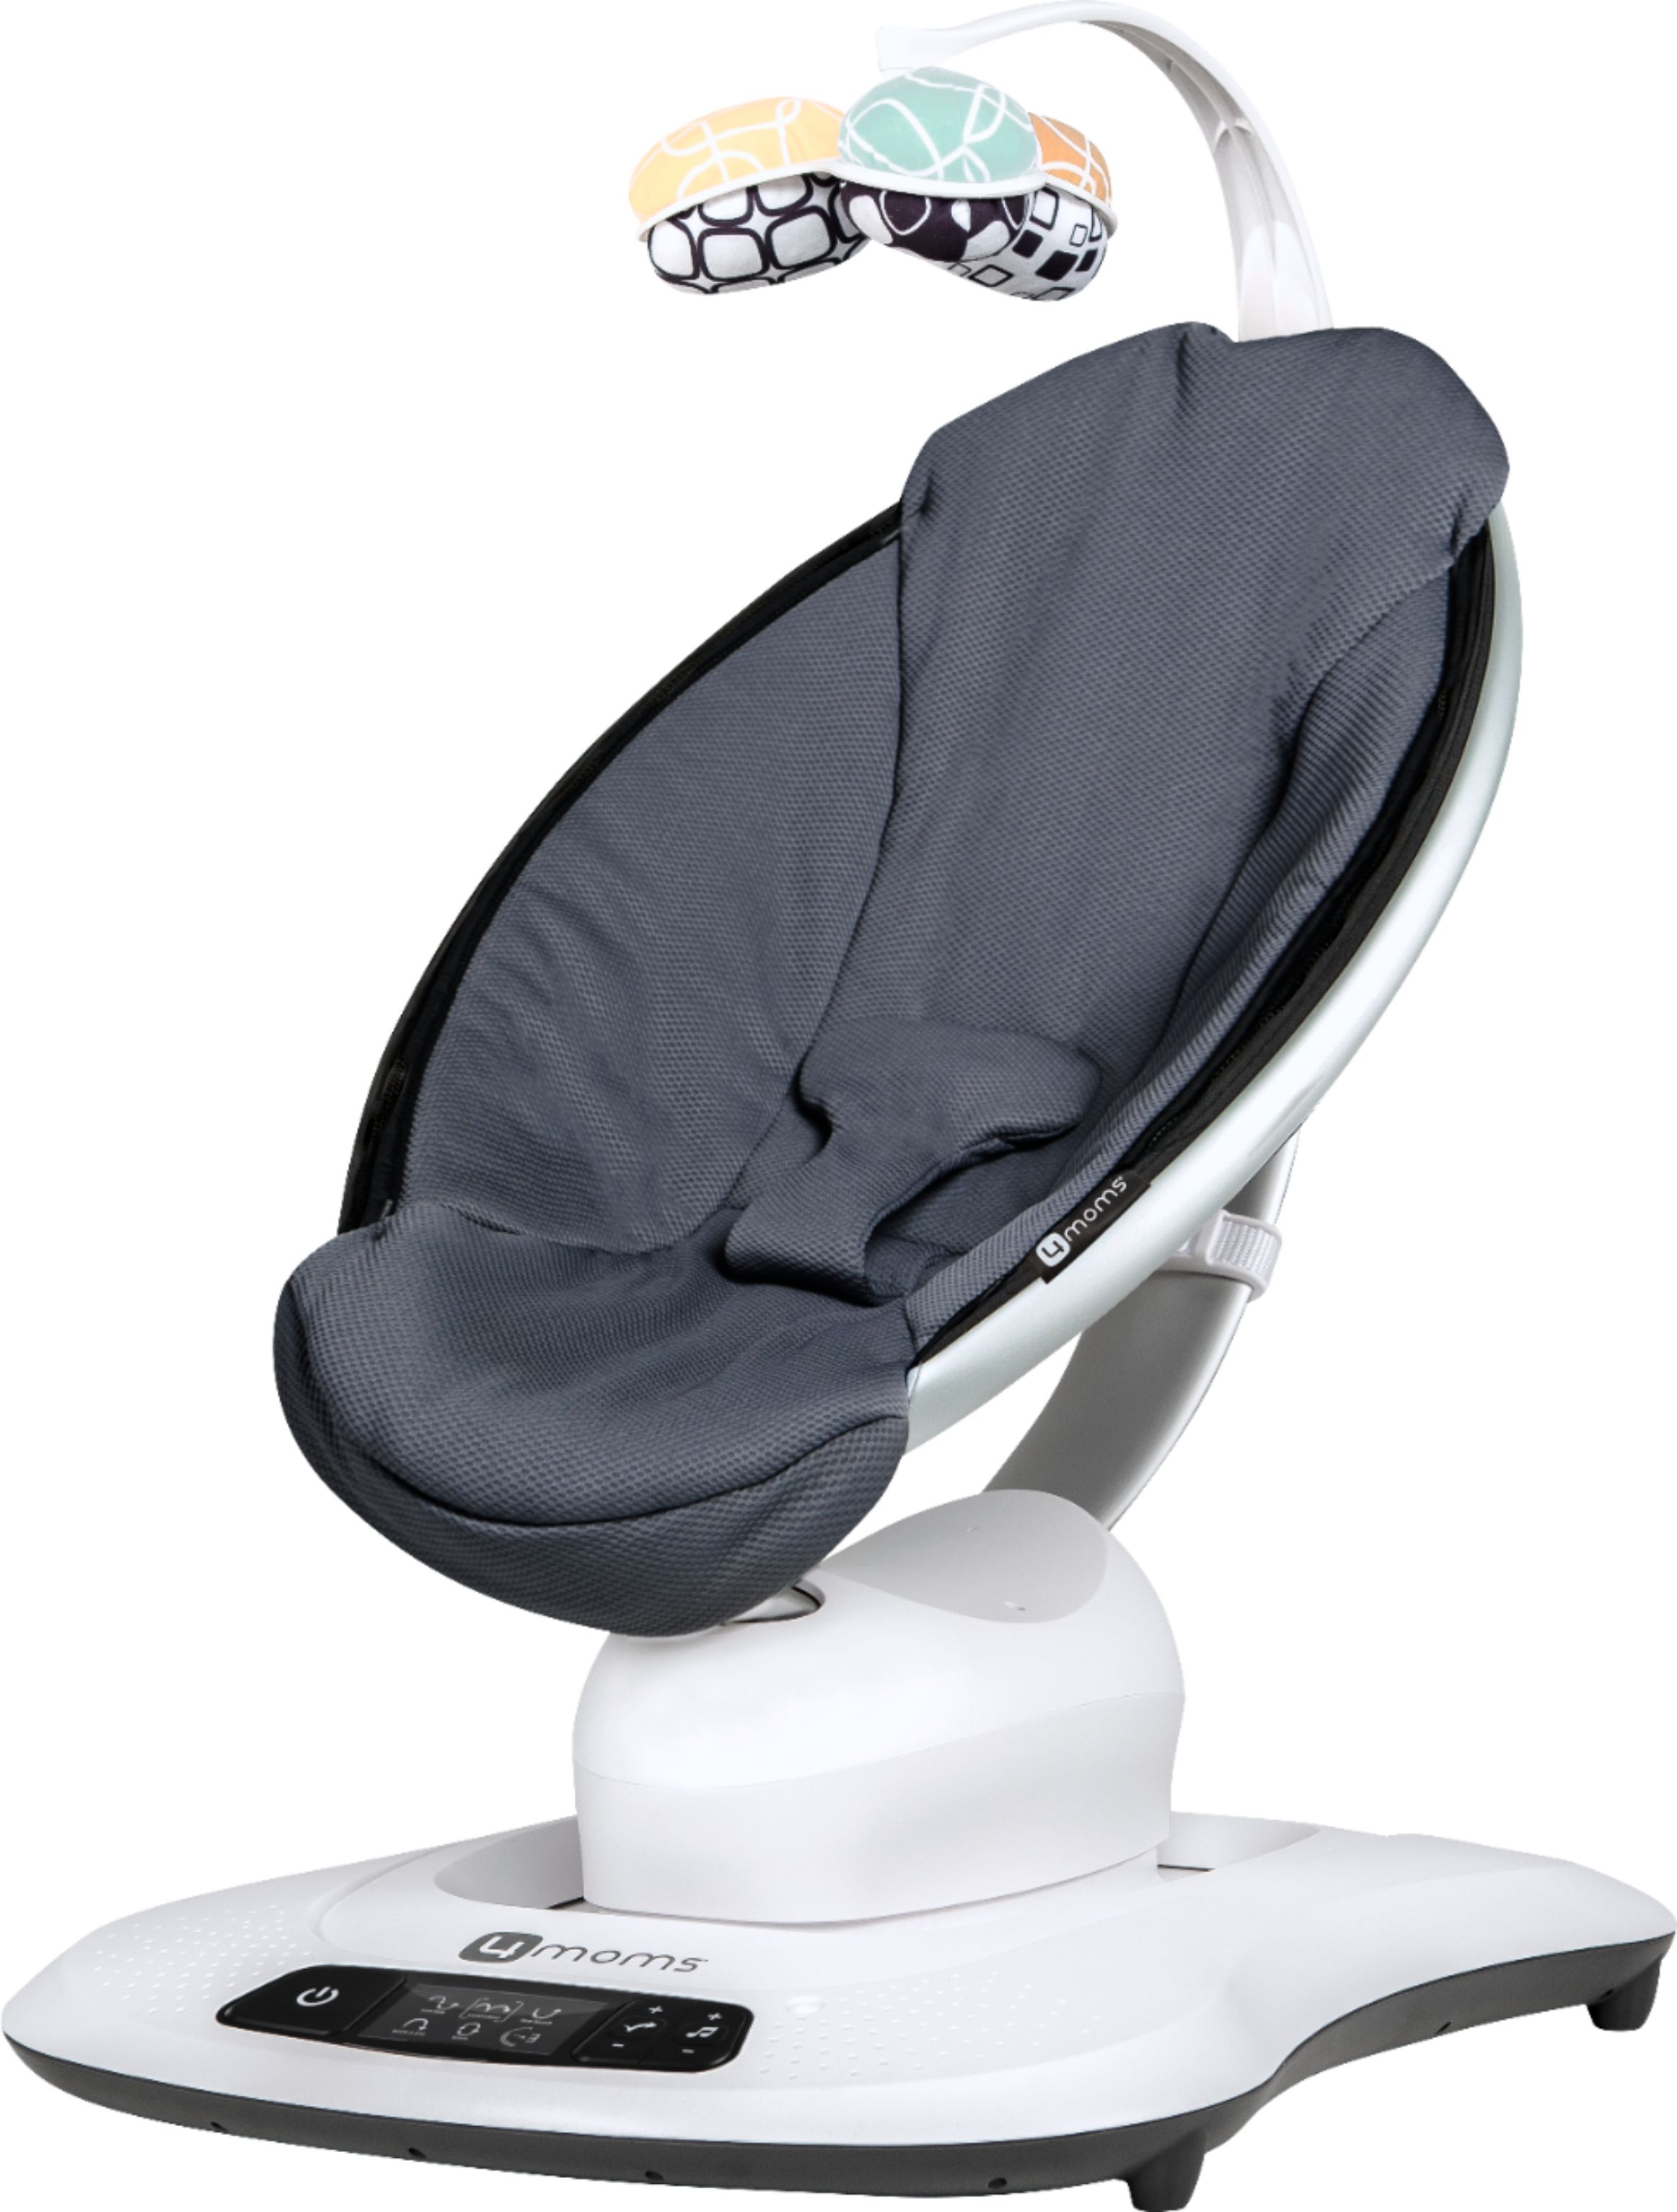 Angle View: 4moms® rockaRoo® infant seat | Compact Baby Swing | Dark Grey Cool Mesh